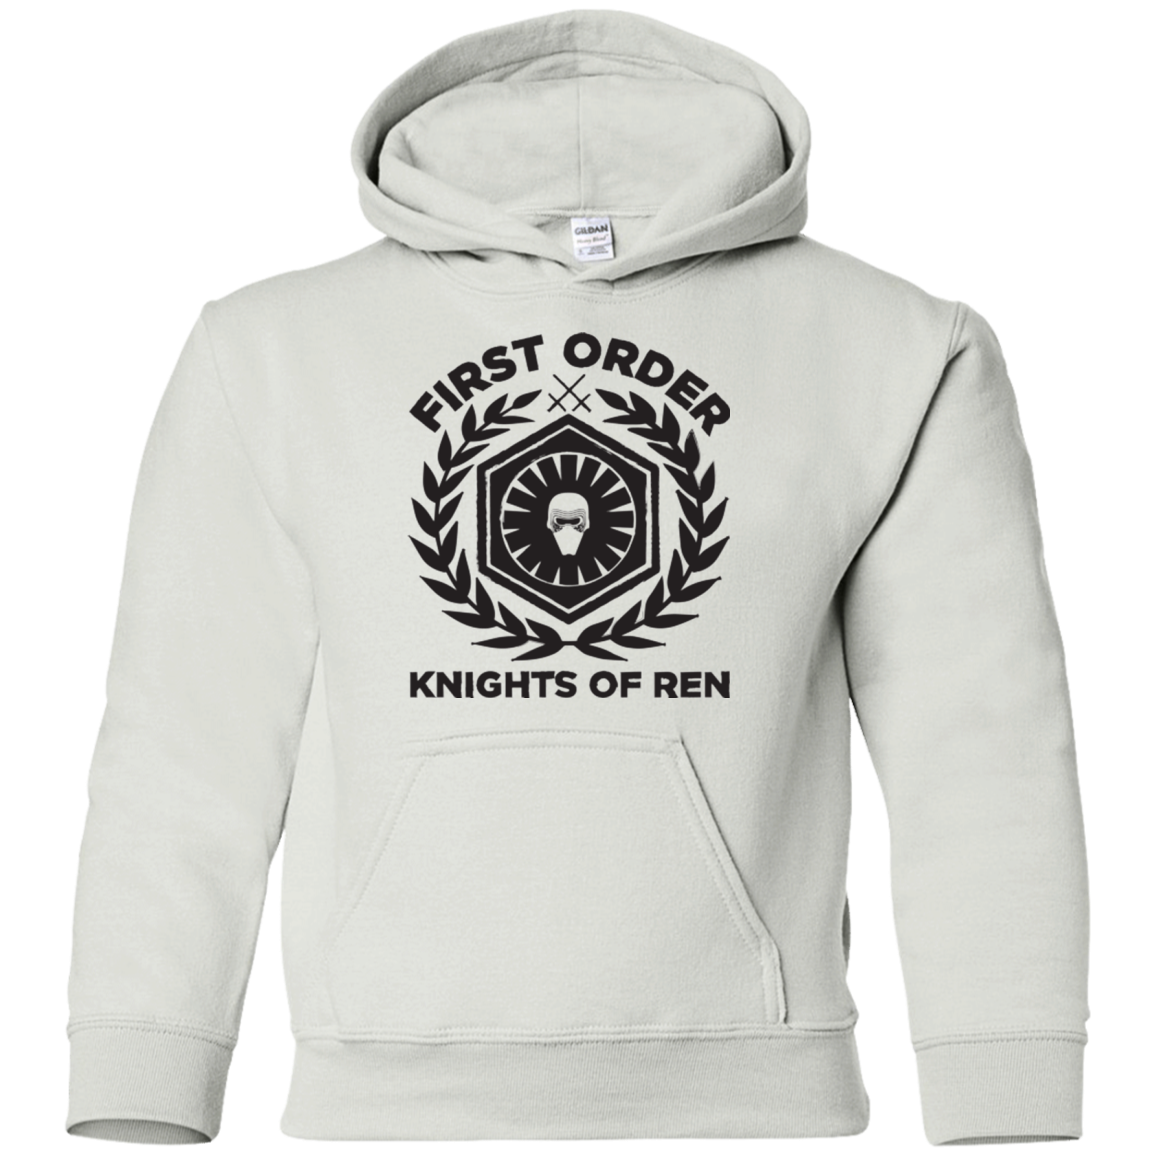 Knights of Ren Youth Hoodie